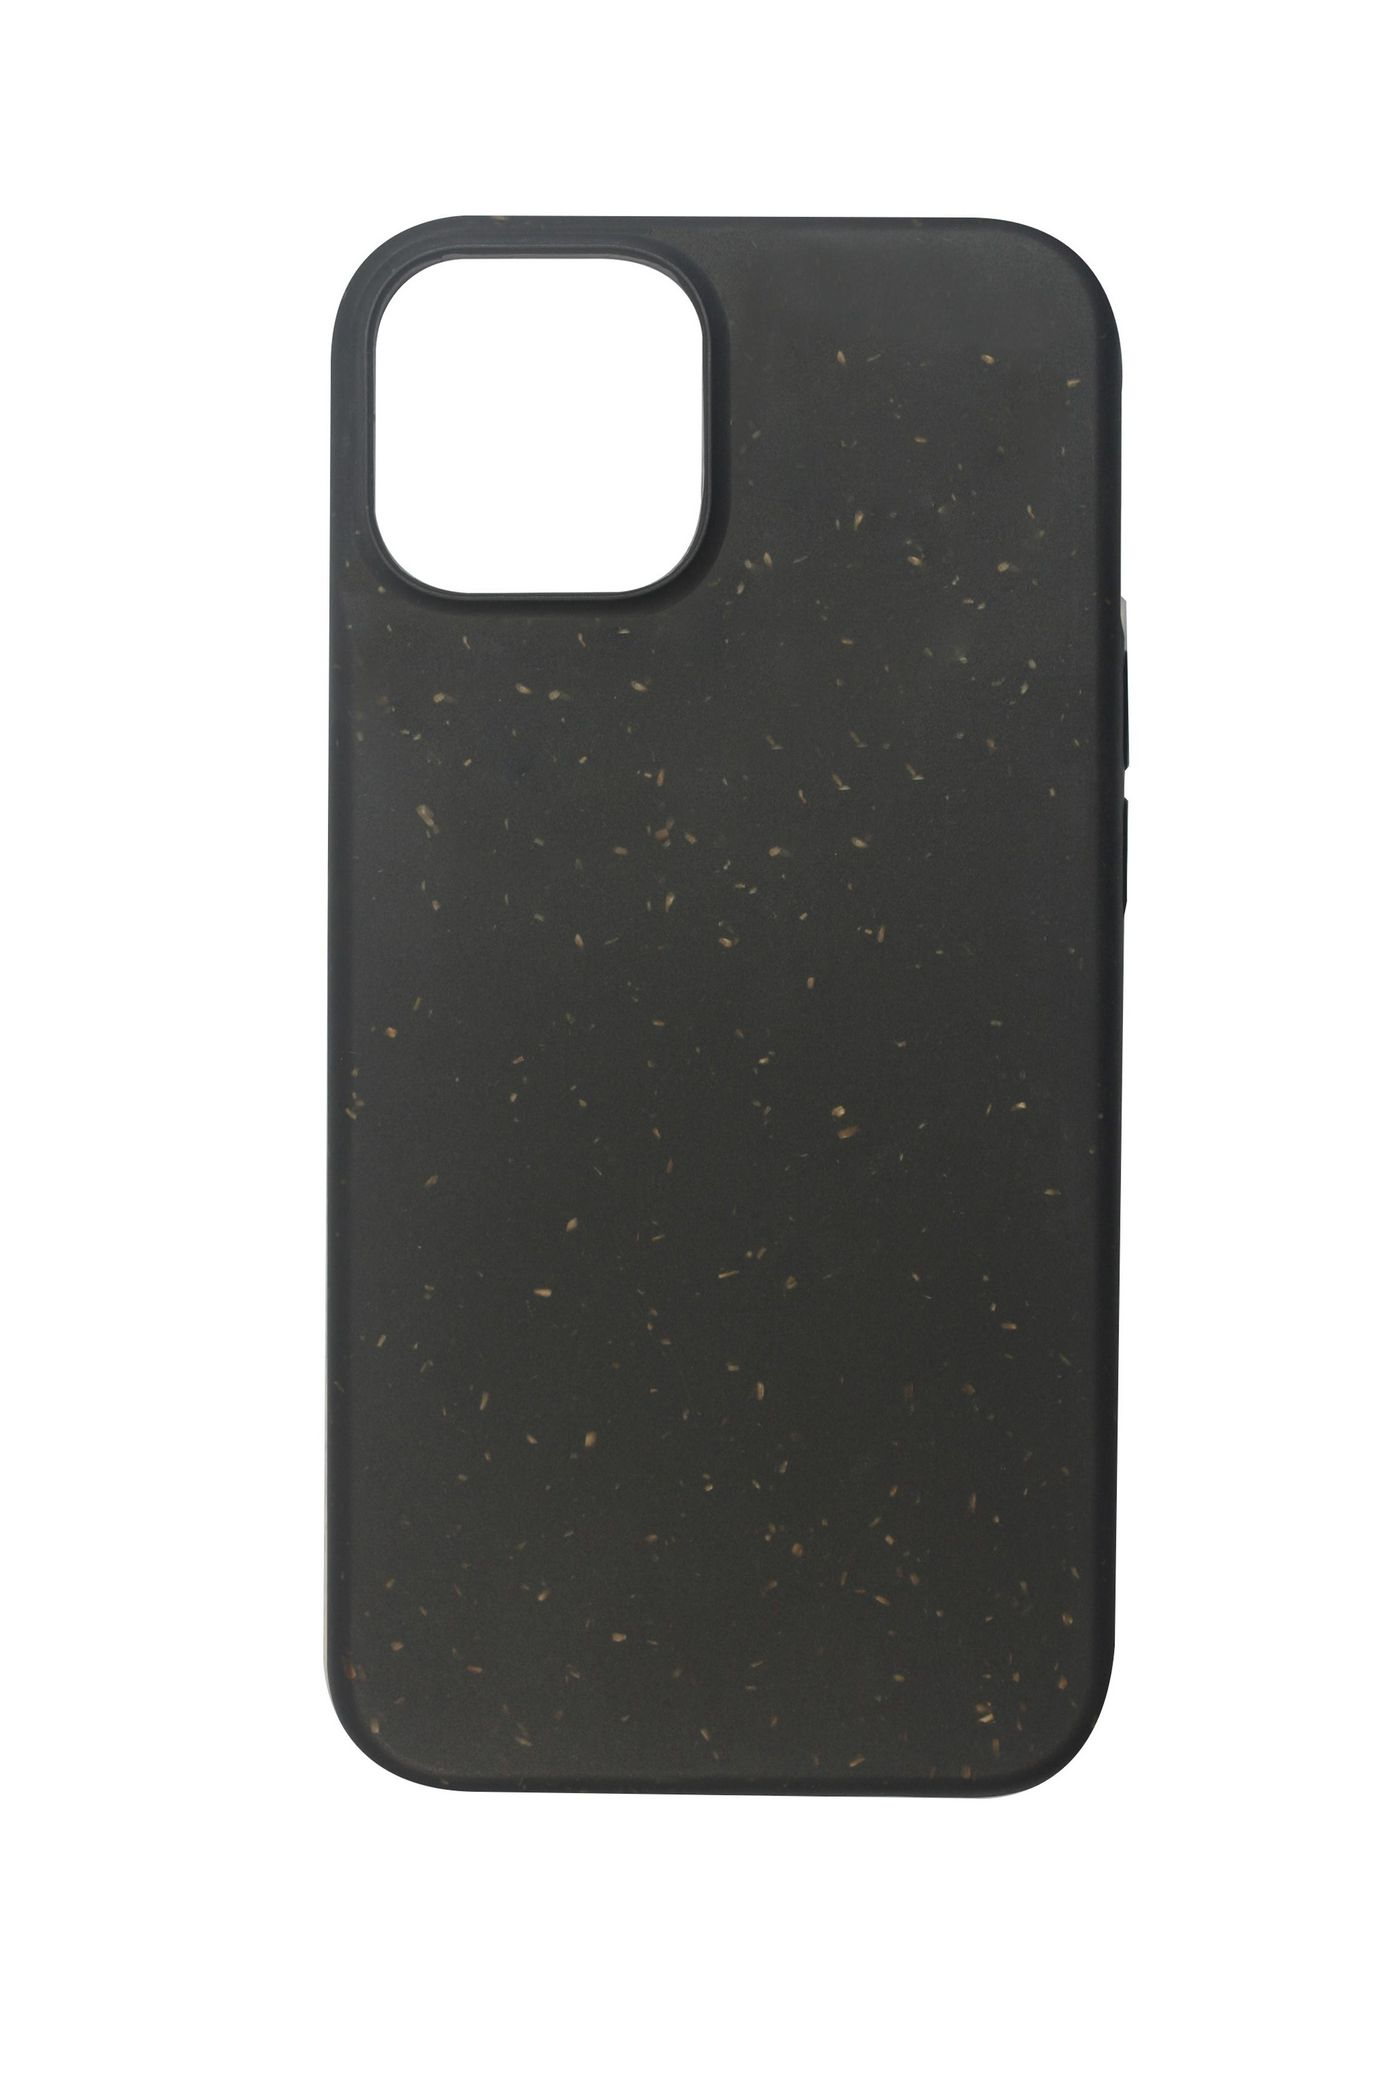 eSTUFF 100% Biodegradable case for iPhone 13 Pro mobile phone case...